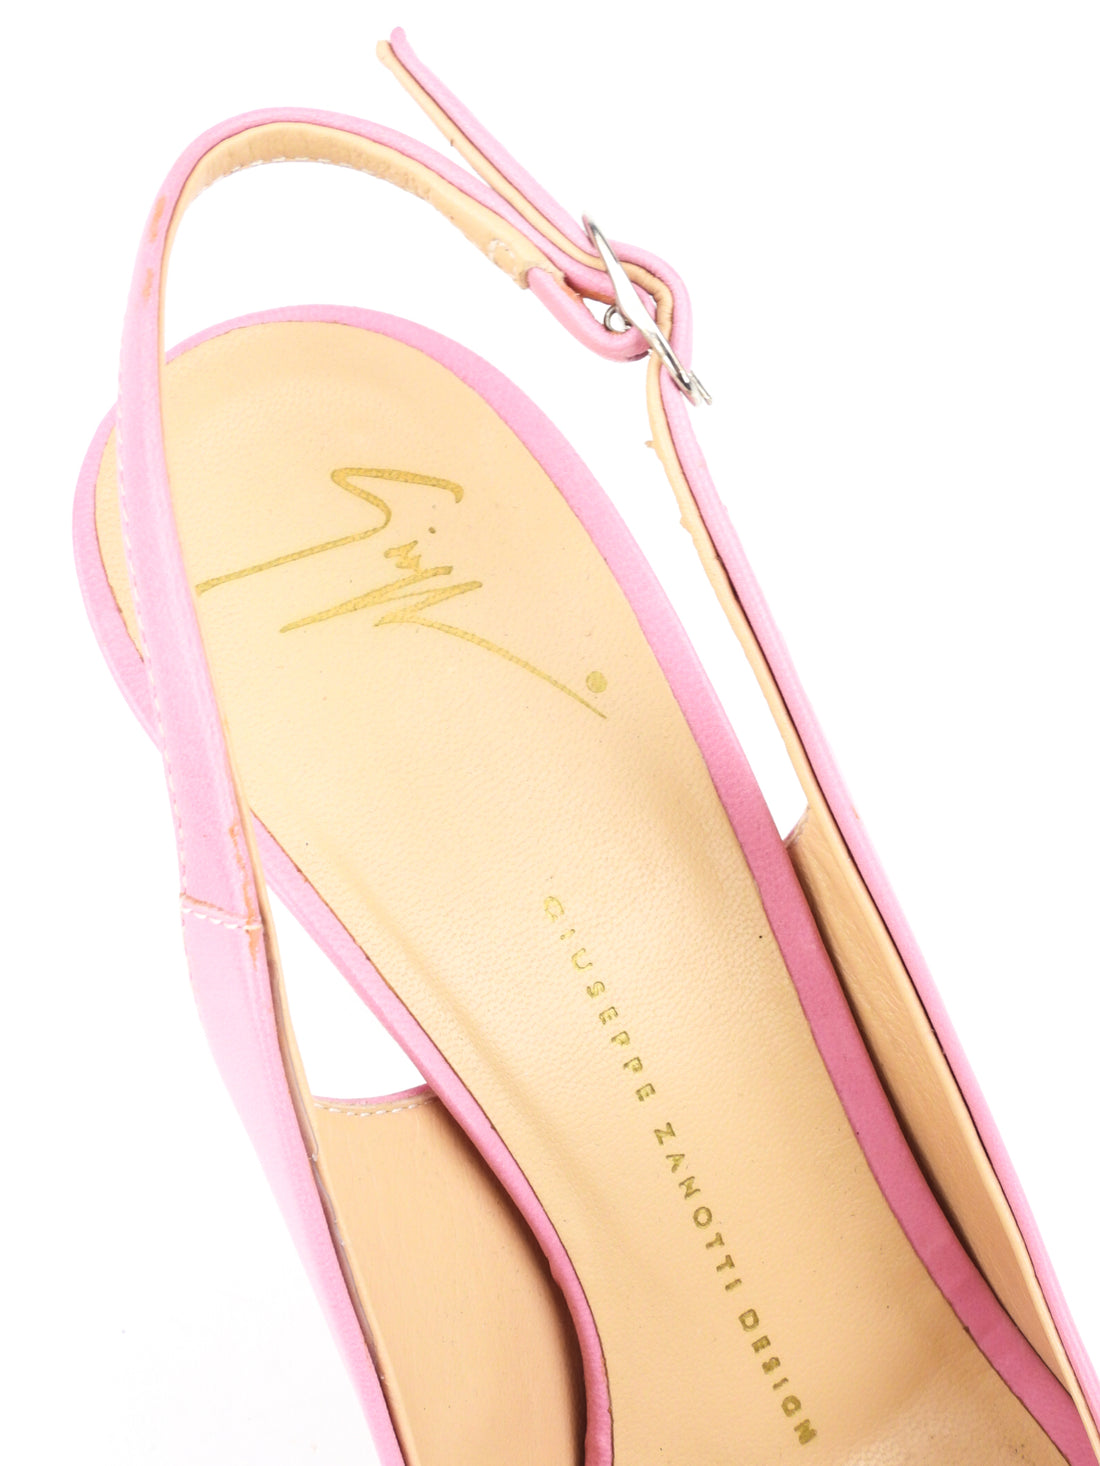 Giuseppe Zanotti Design Pink Goatskin Leather Slingback Peep Toe Plato Sandals - 38.5